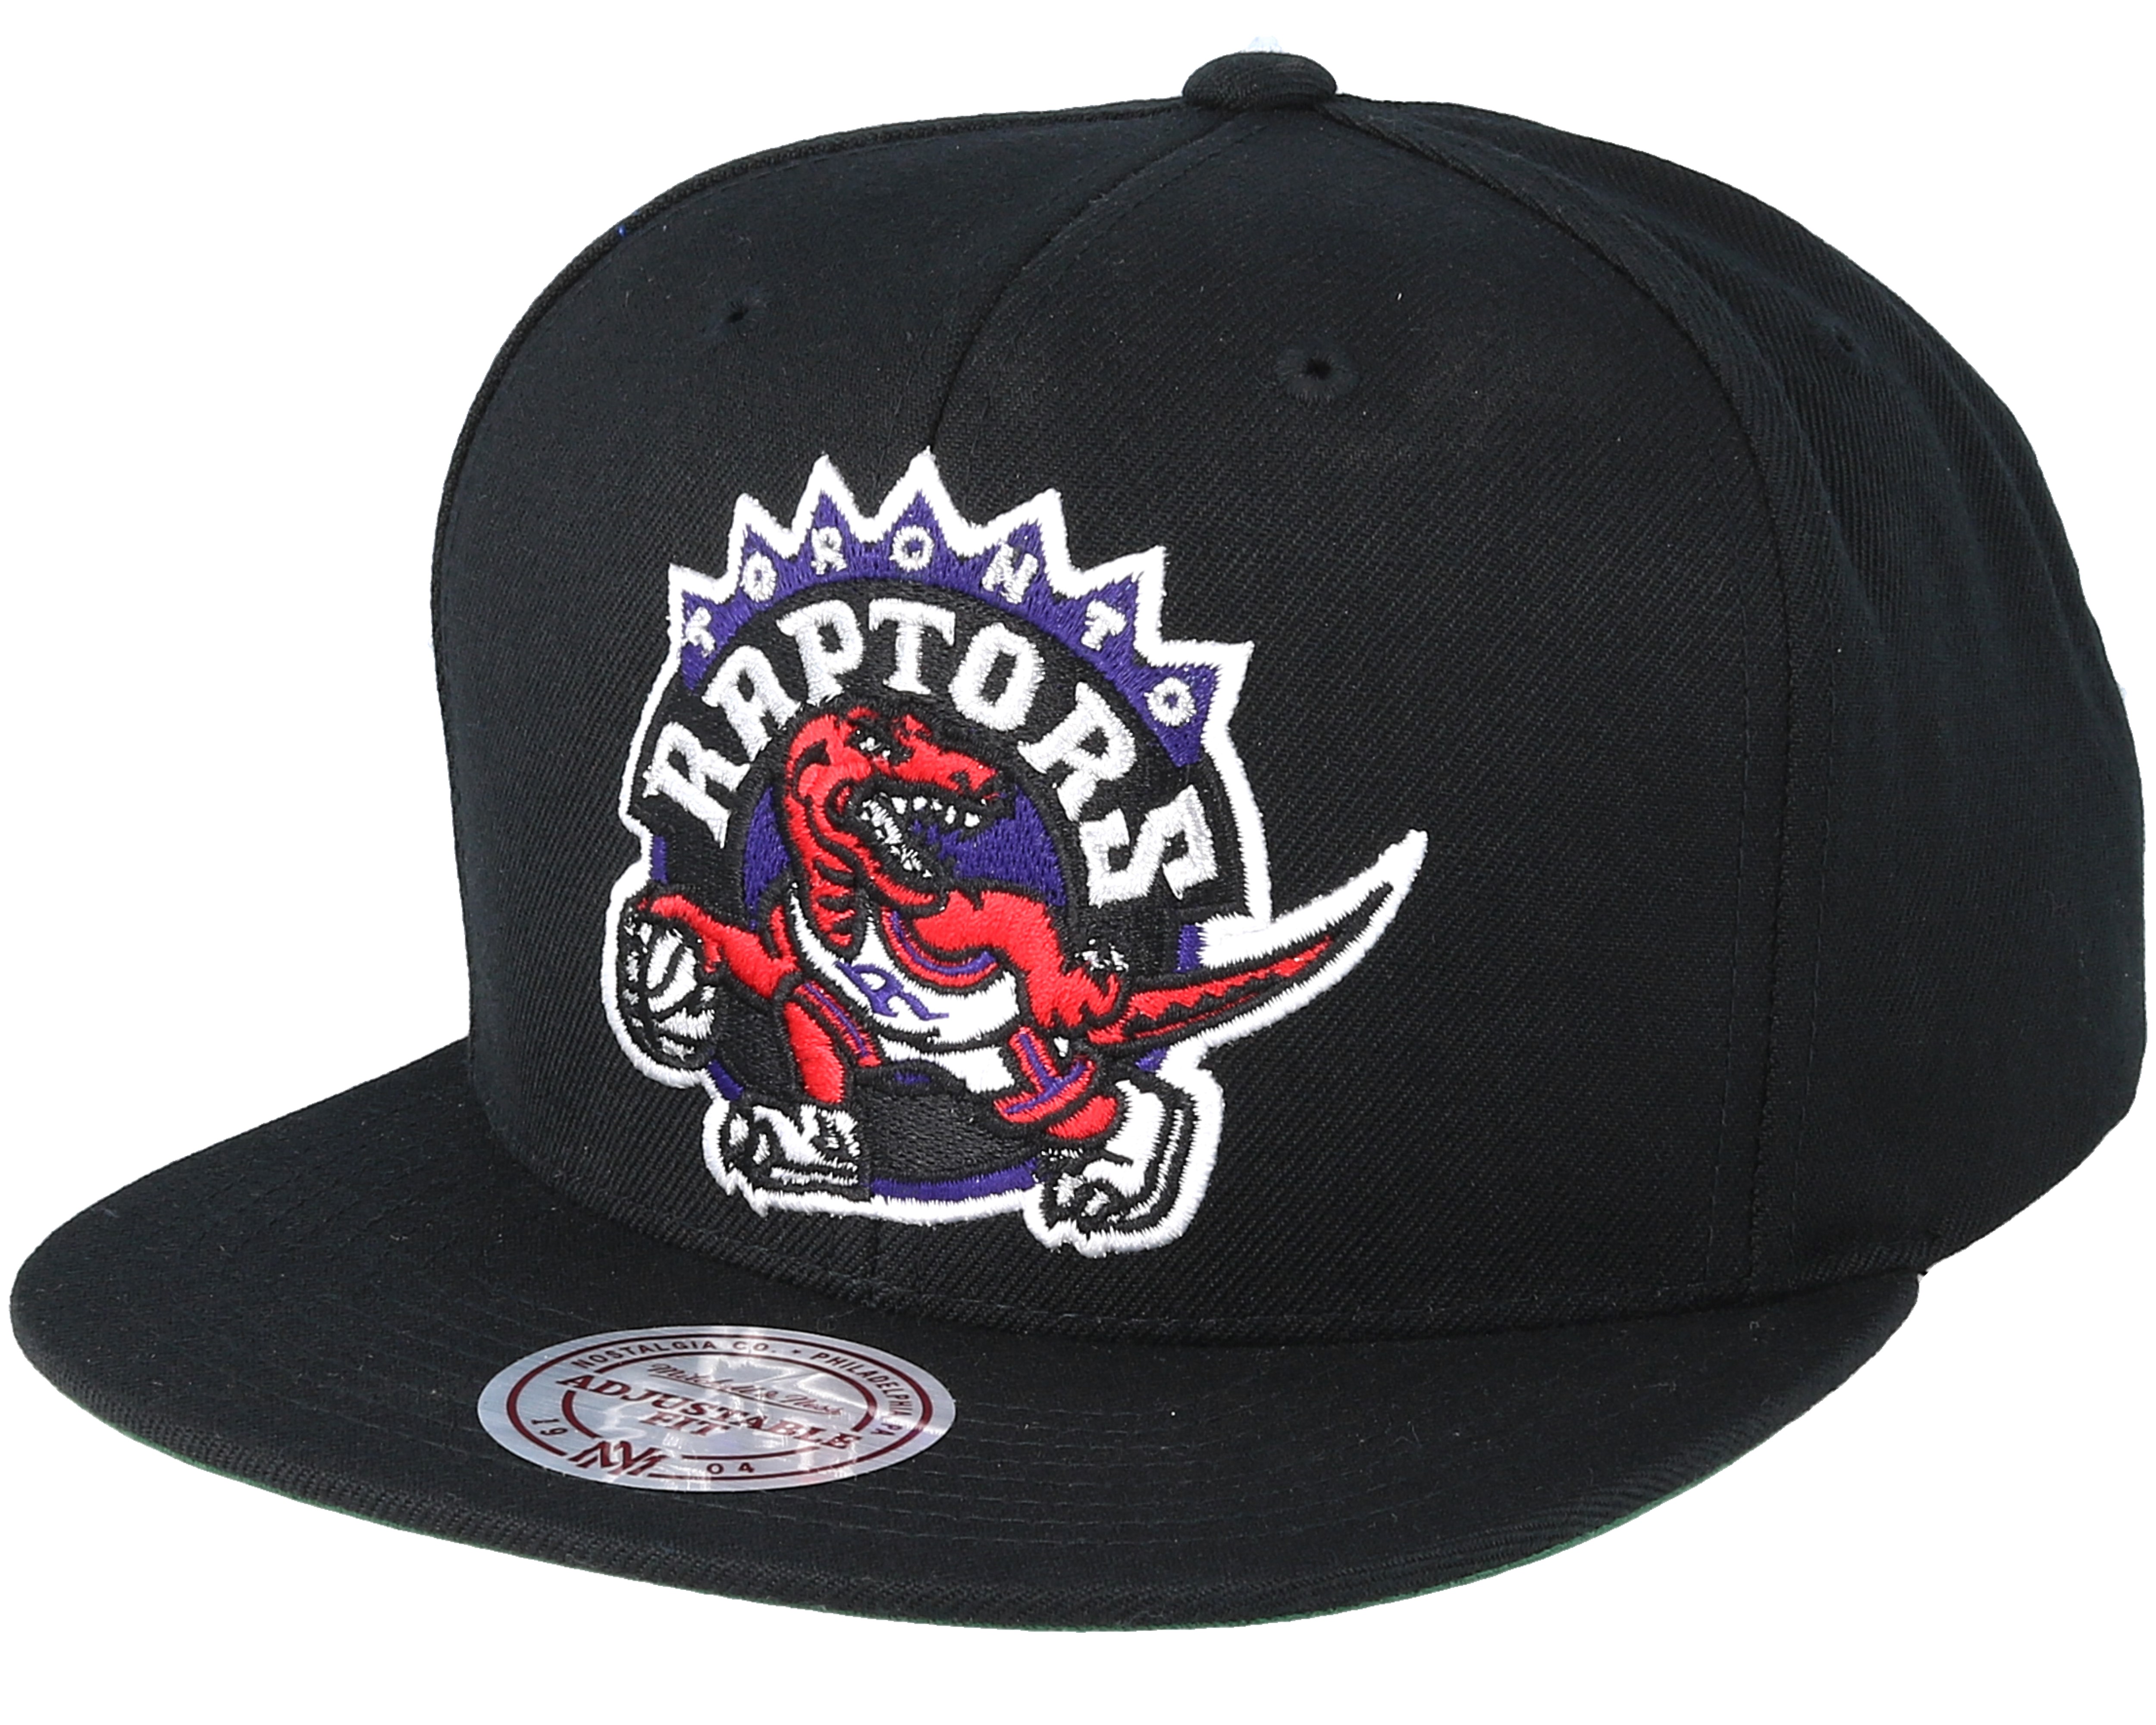 Toronto Raptor Wool Solid Black/Red Snapback - Mitchell & Ness caps ...